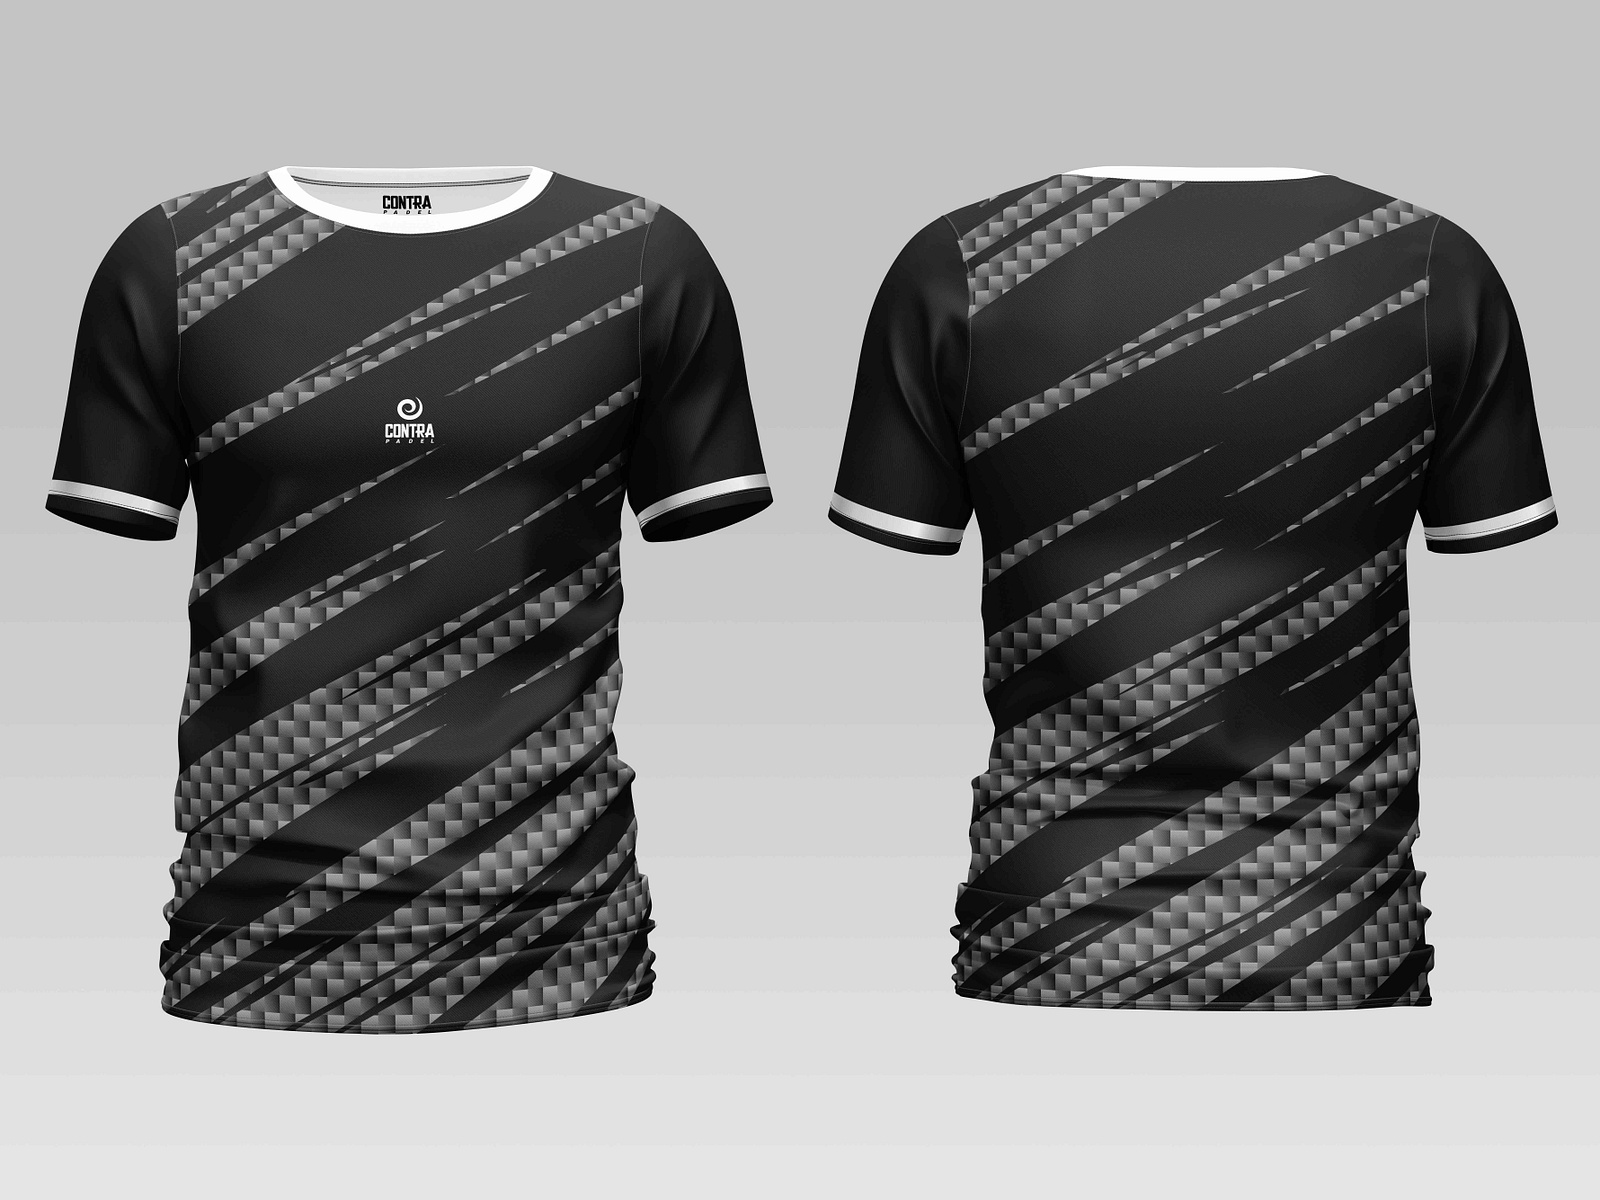 Contra Black Jersey Tshirt Design by Md Nuruzzaman on Dribbble